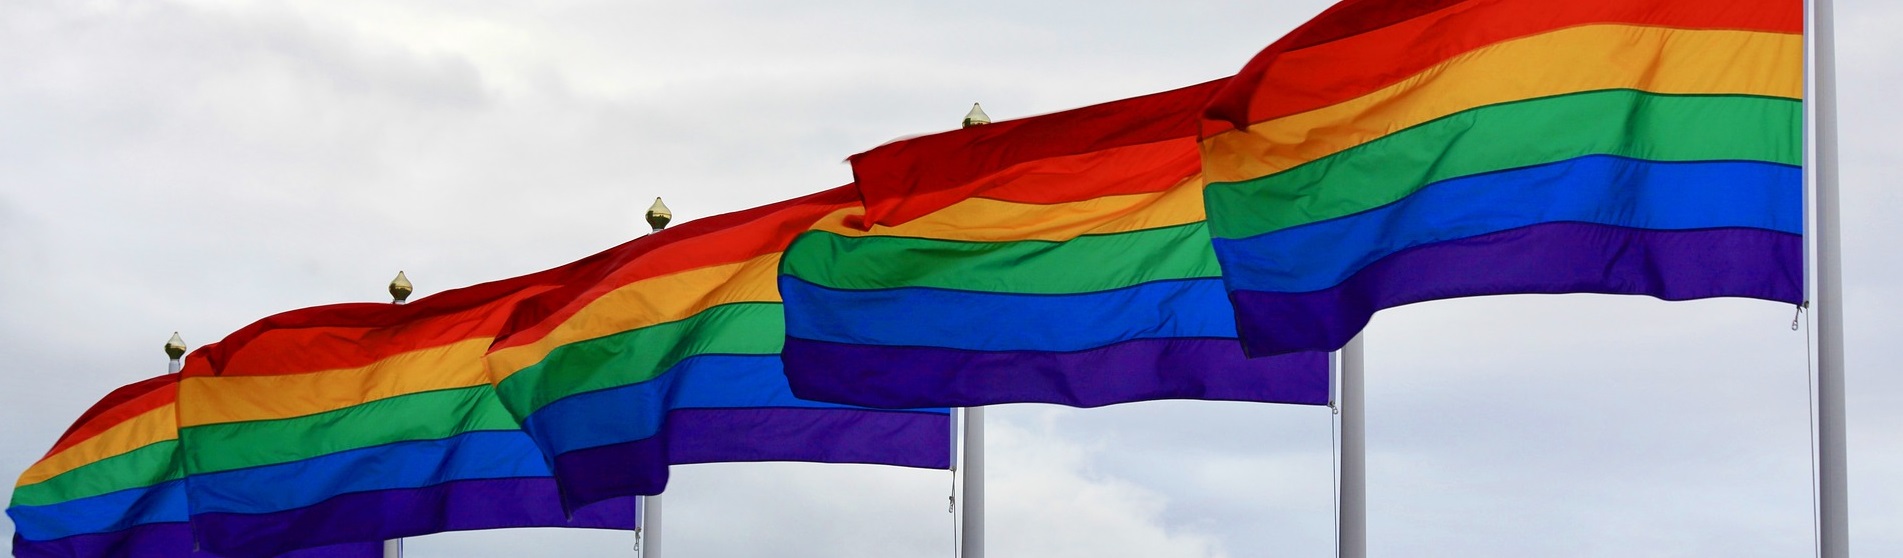 history of gay pride flag